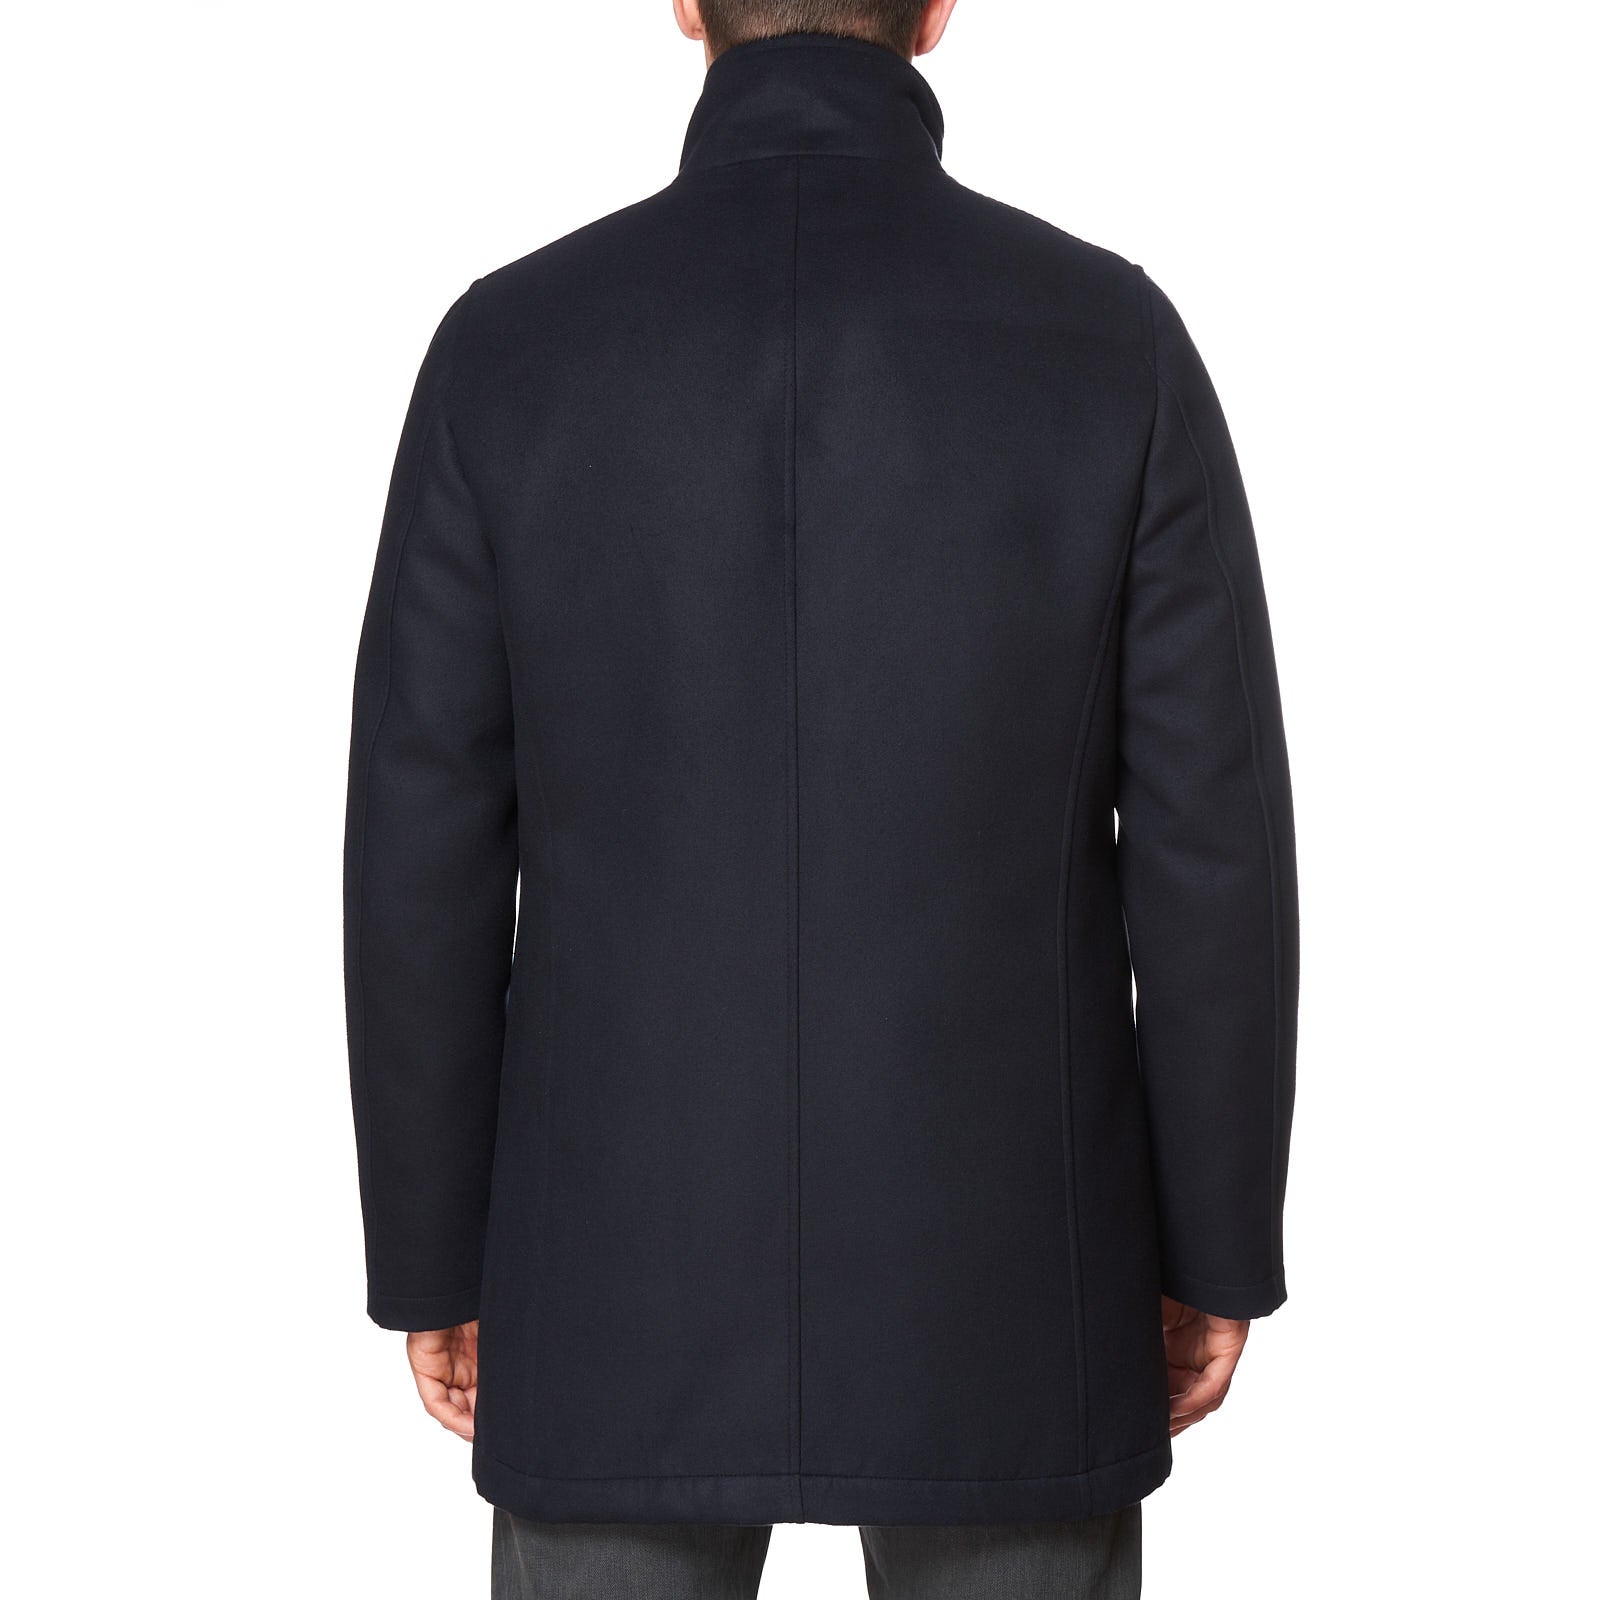 KITON KIRED "Emilius" Dark Blue Padded Jacket Coat Beaver Collar EU 50 US 40 KIRED